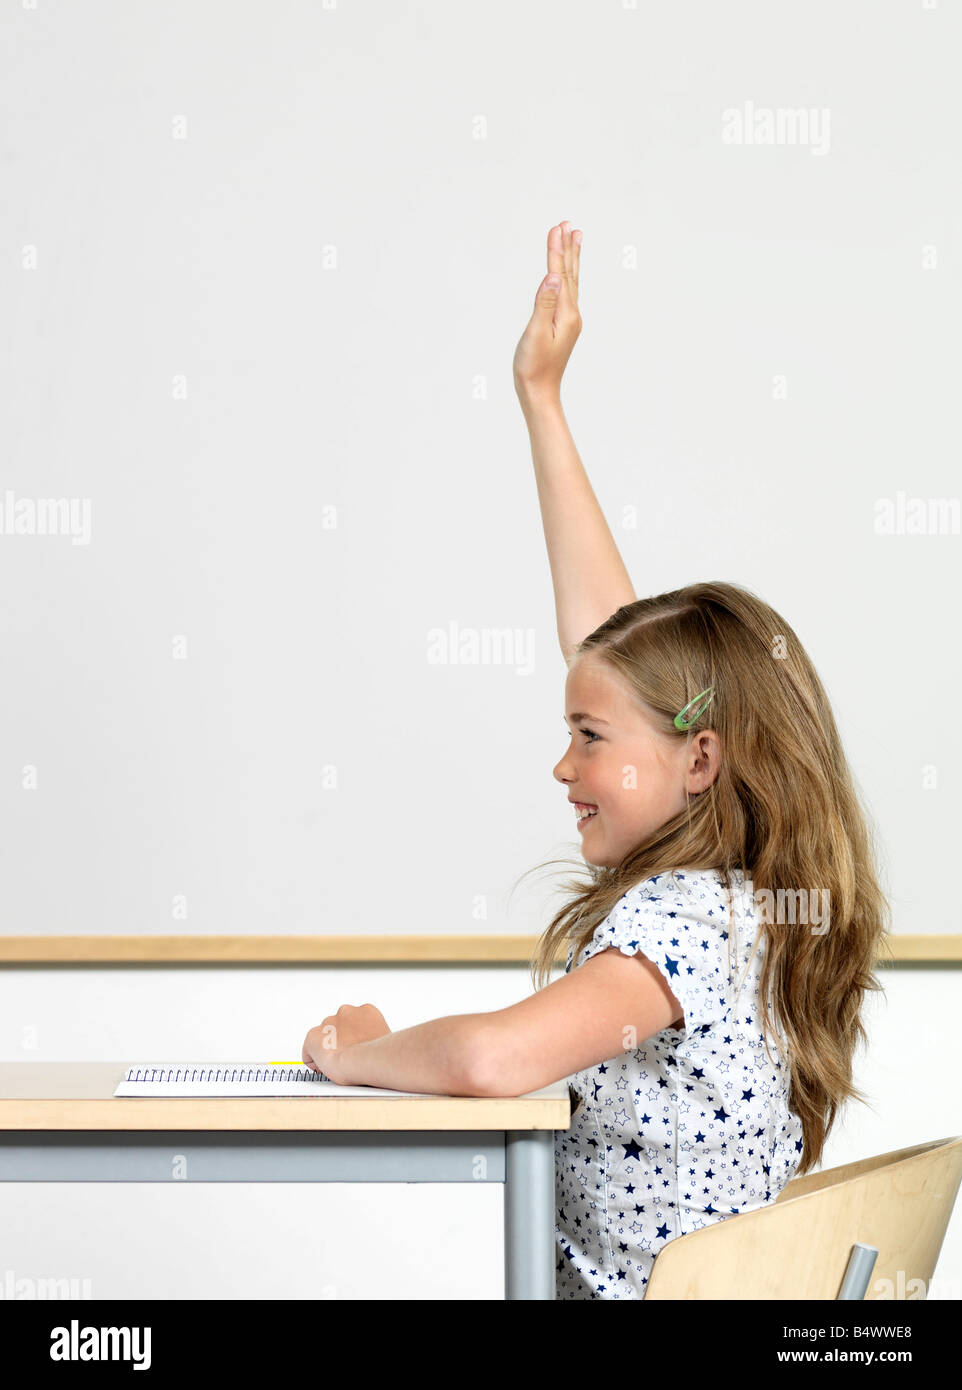 Girl raising hand in classroom Stock Photo